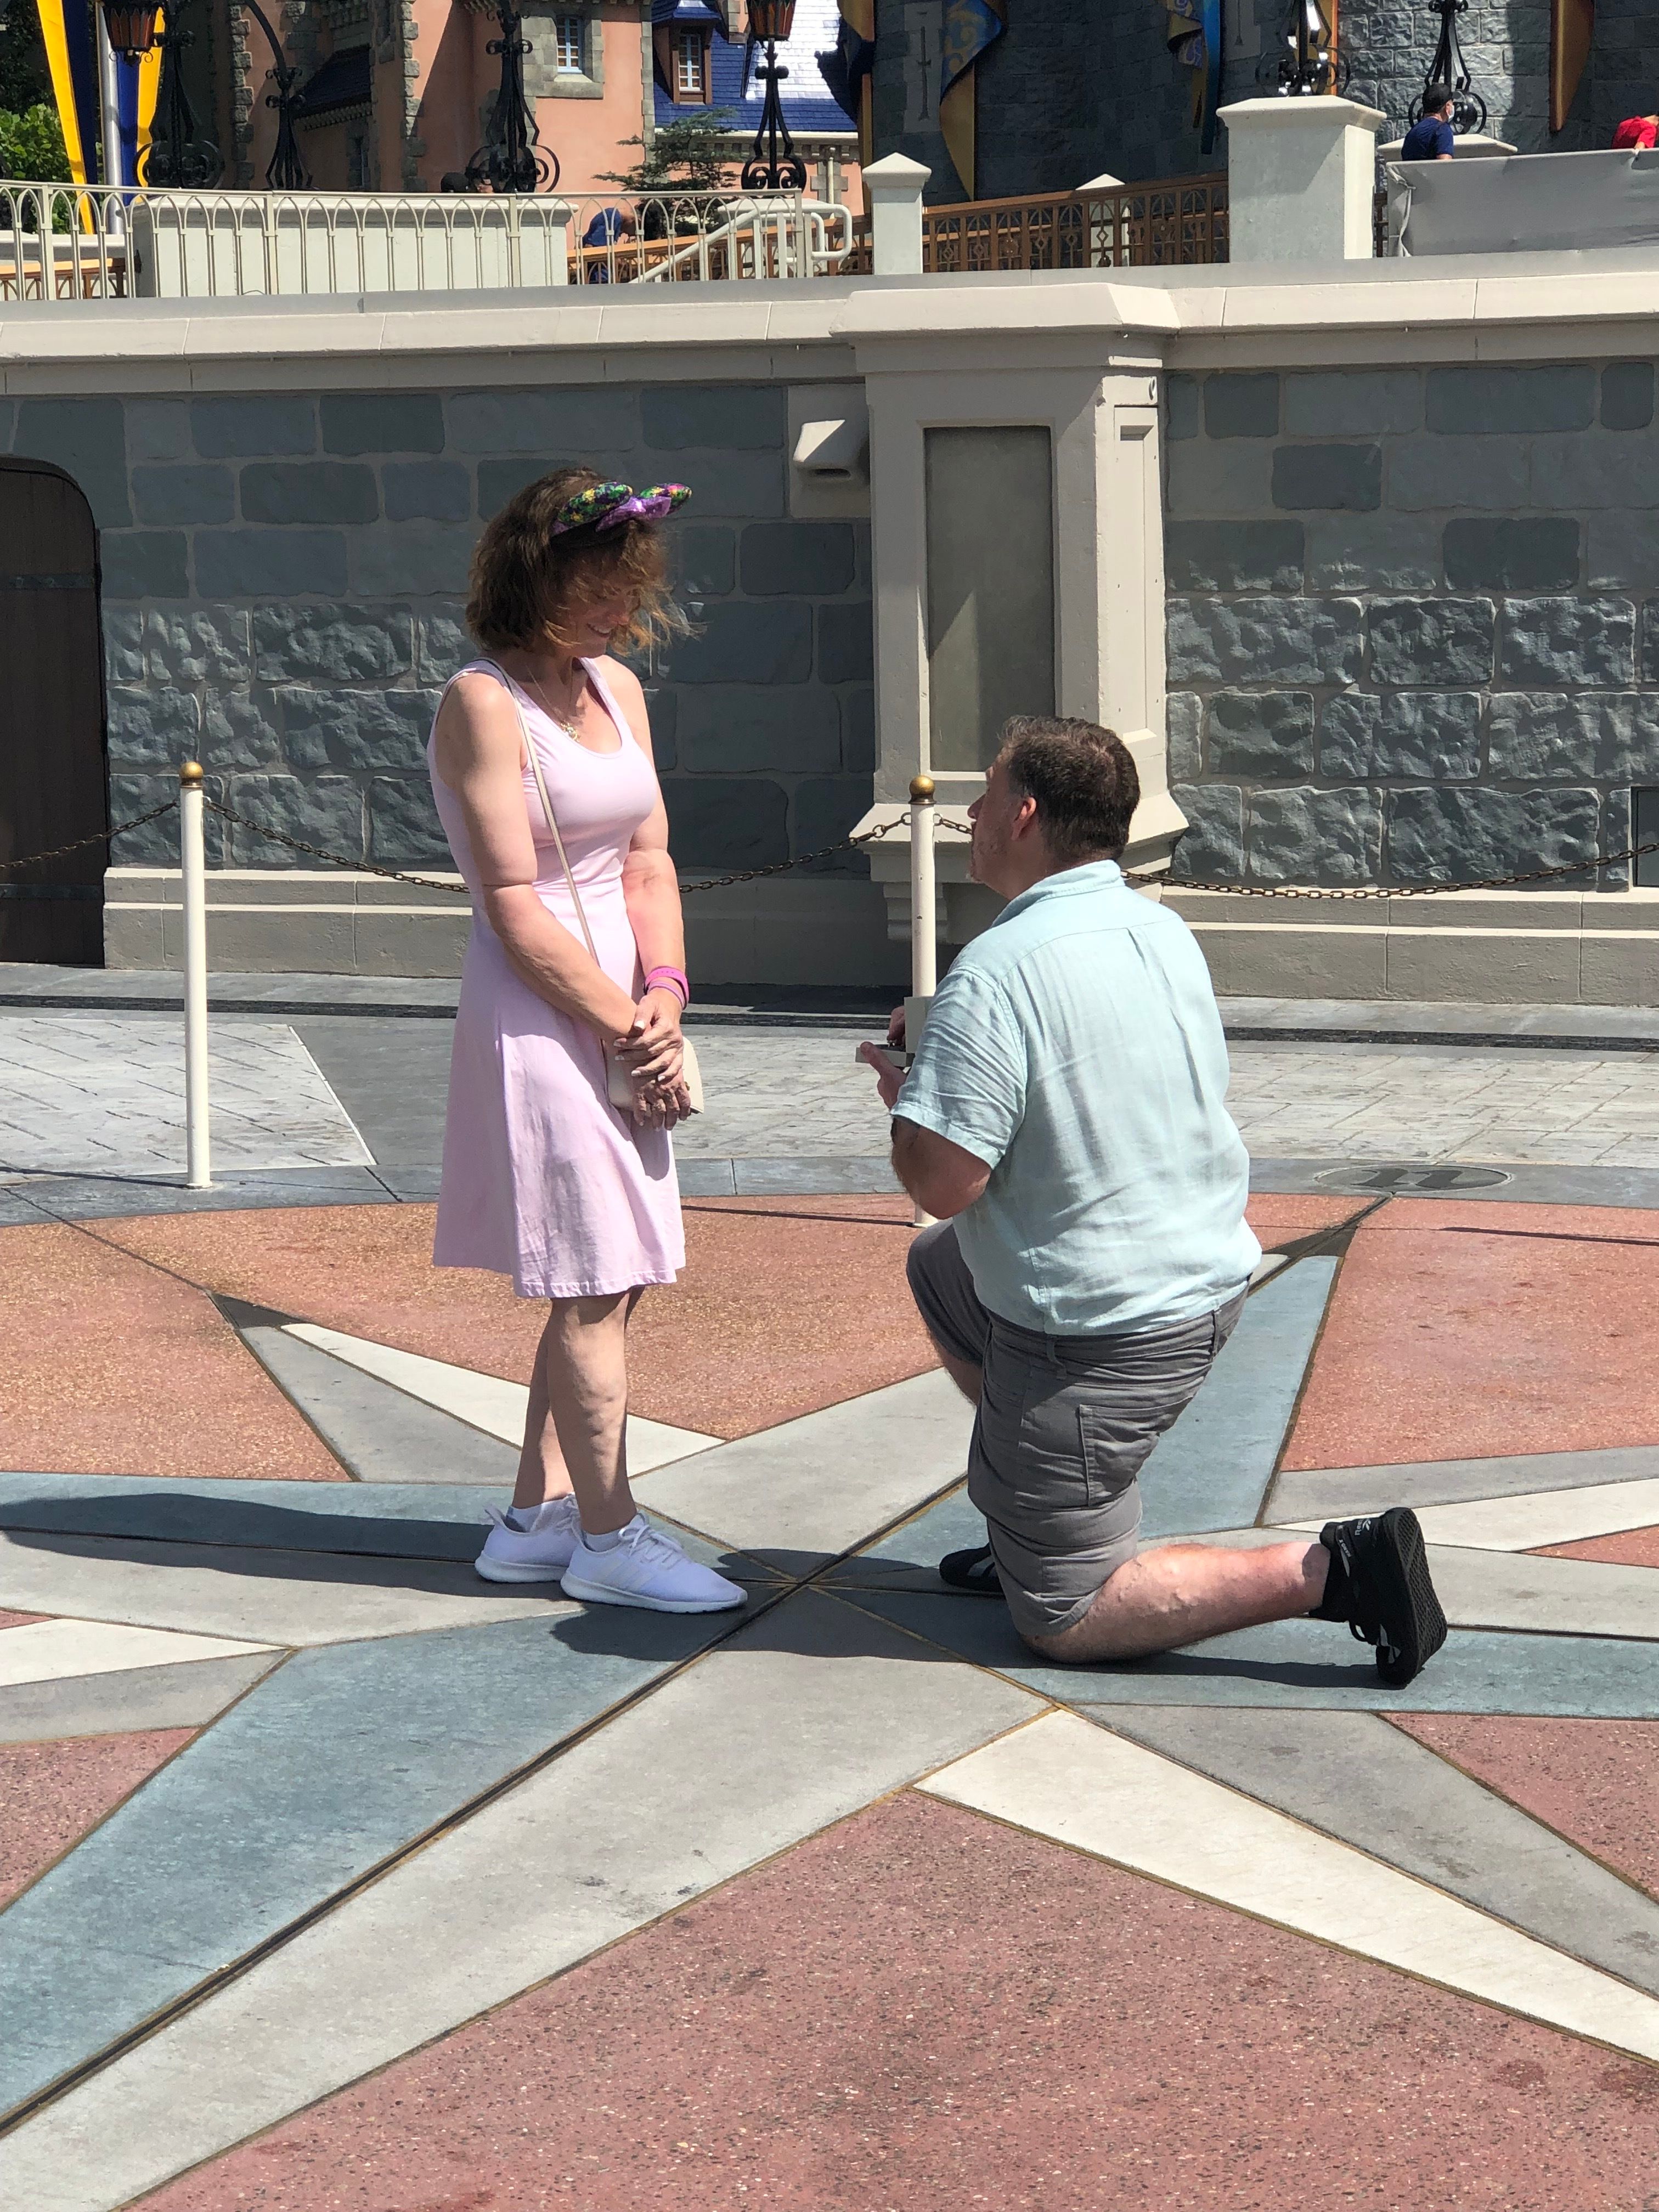 Bart from Cliniko proposing to his fiancee Alycia at Disneyworld.